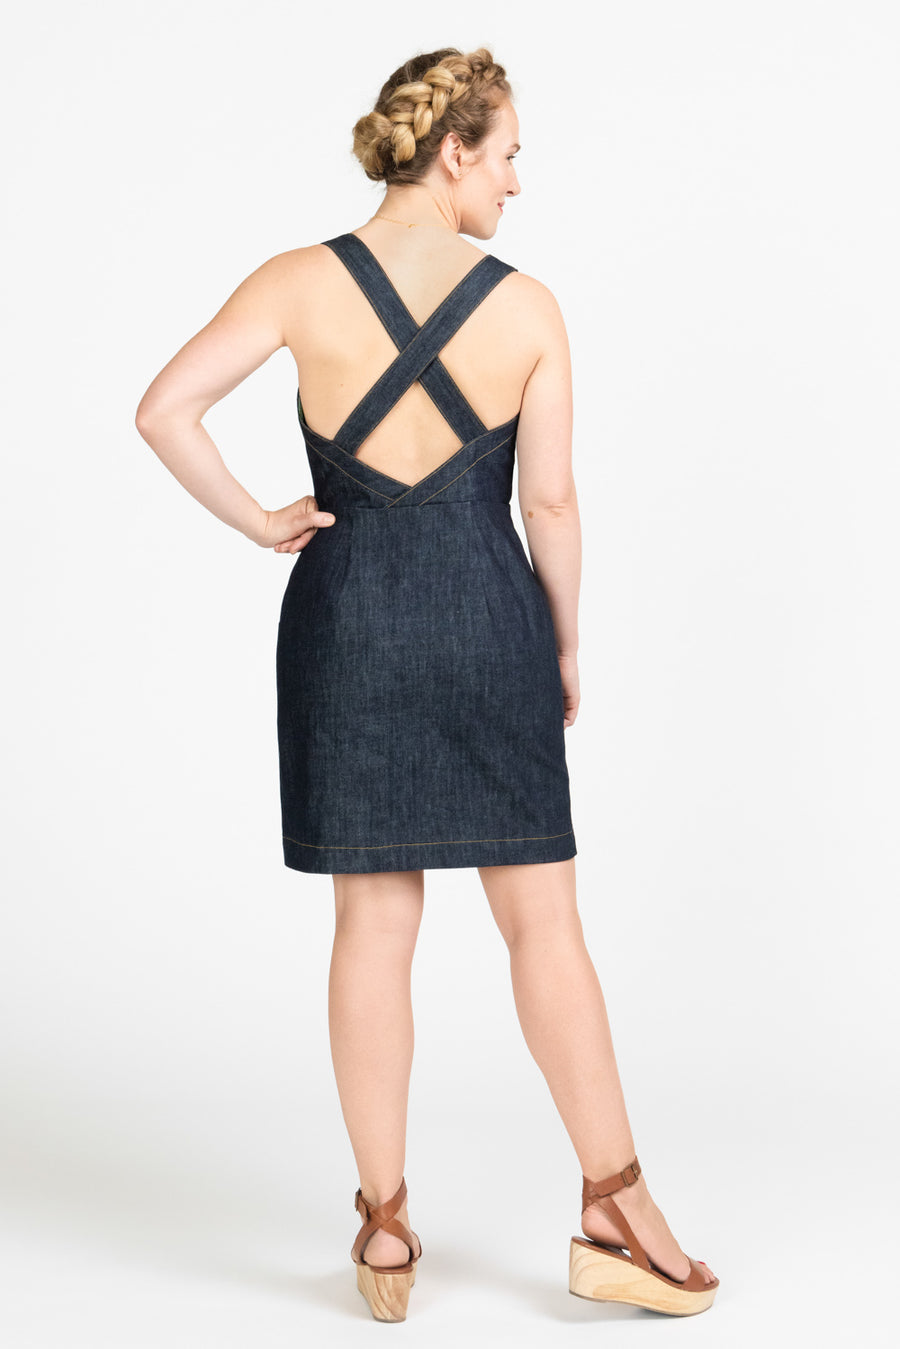 Bras for low cut dresses — Blog — Poplin Style Direction